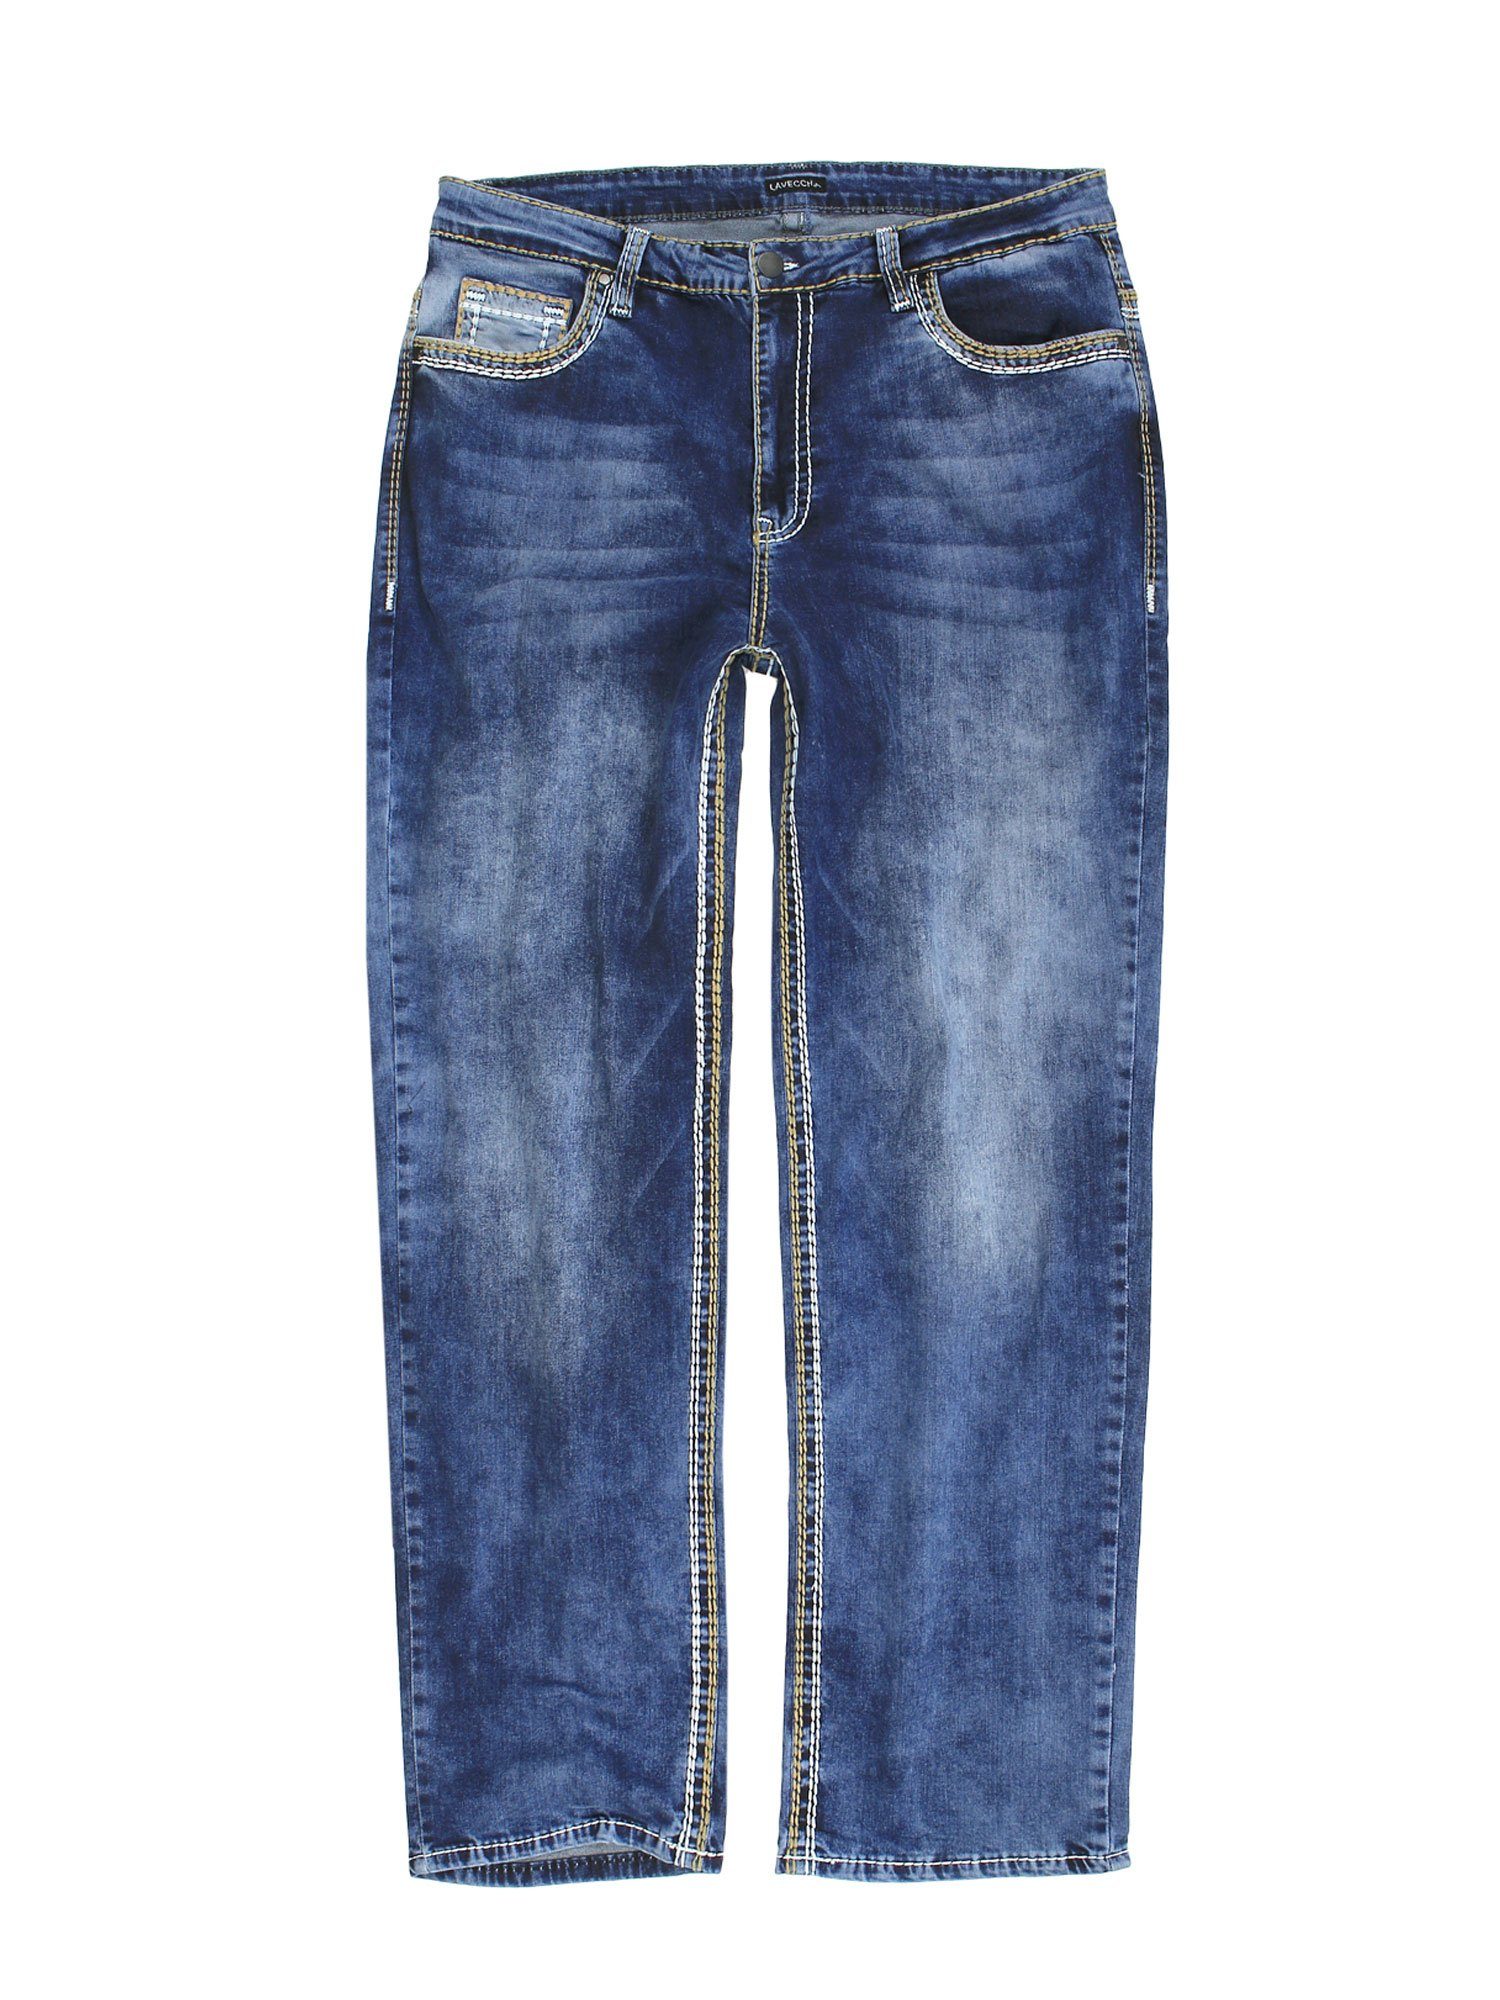 LV-503 mit Übergrößen Lavecchia stoneblau Jeanshose & Comfort-fit-Jeans Herren Naht dicker Stretch Elasthan